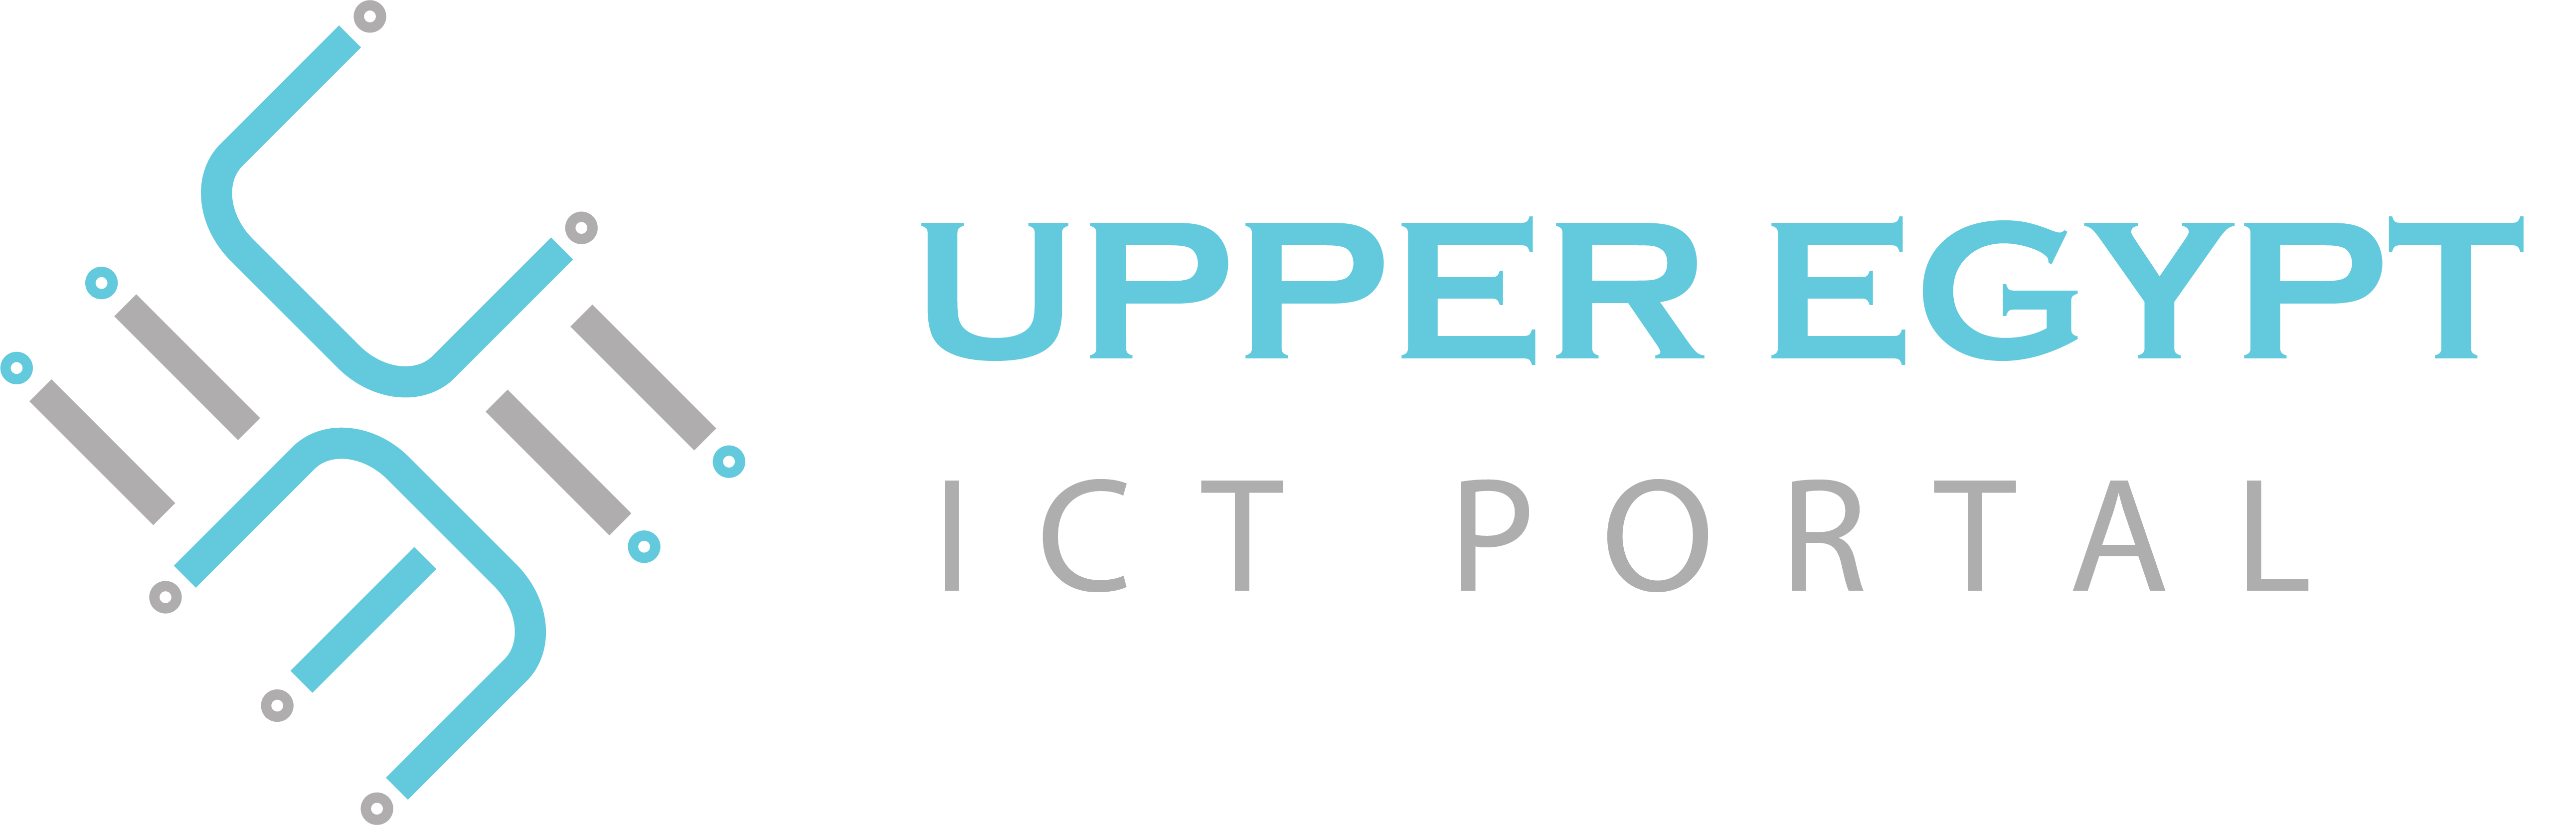 UpperEgypt ICT Portal